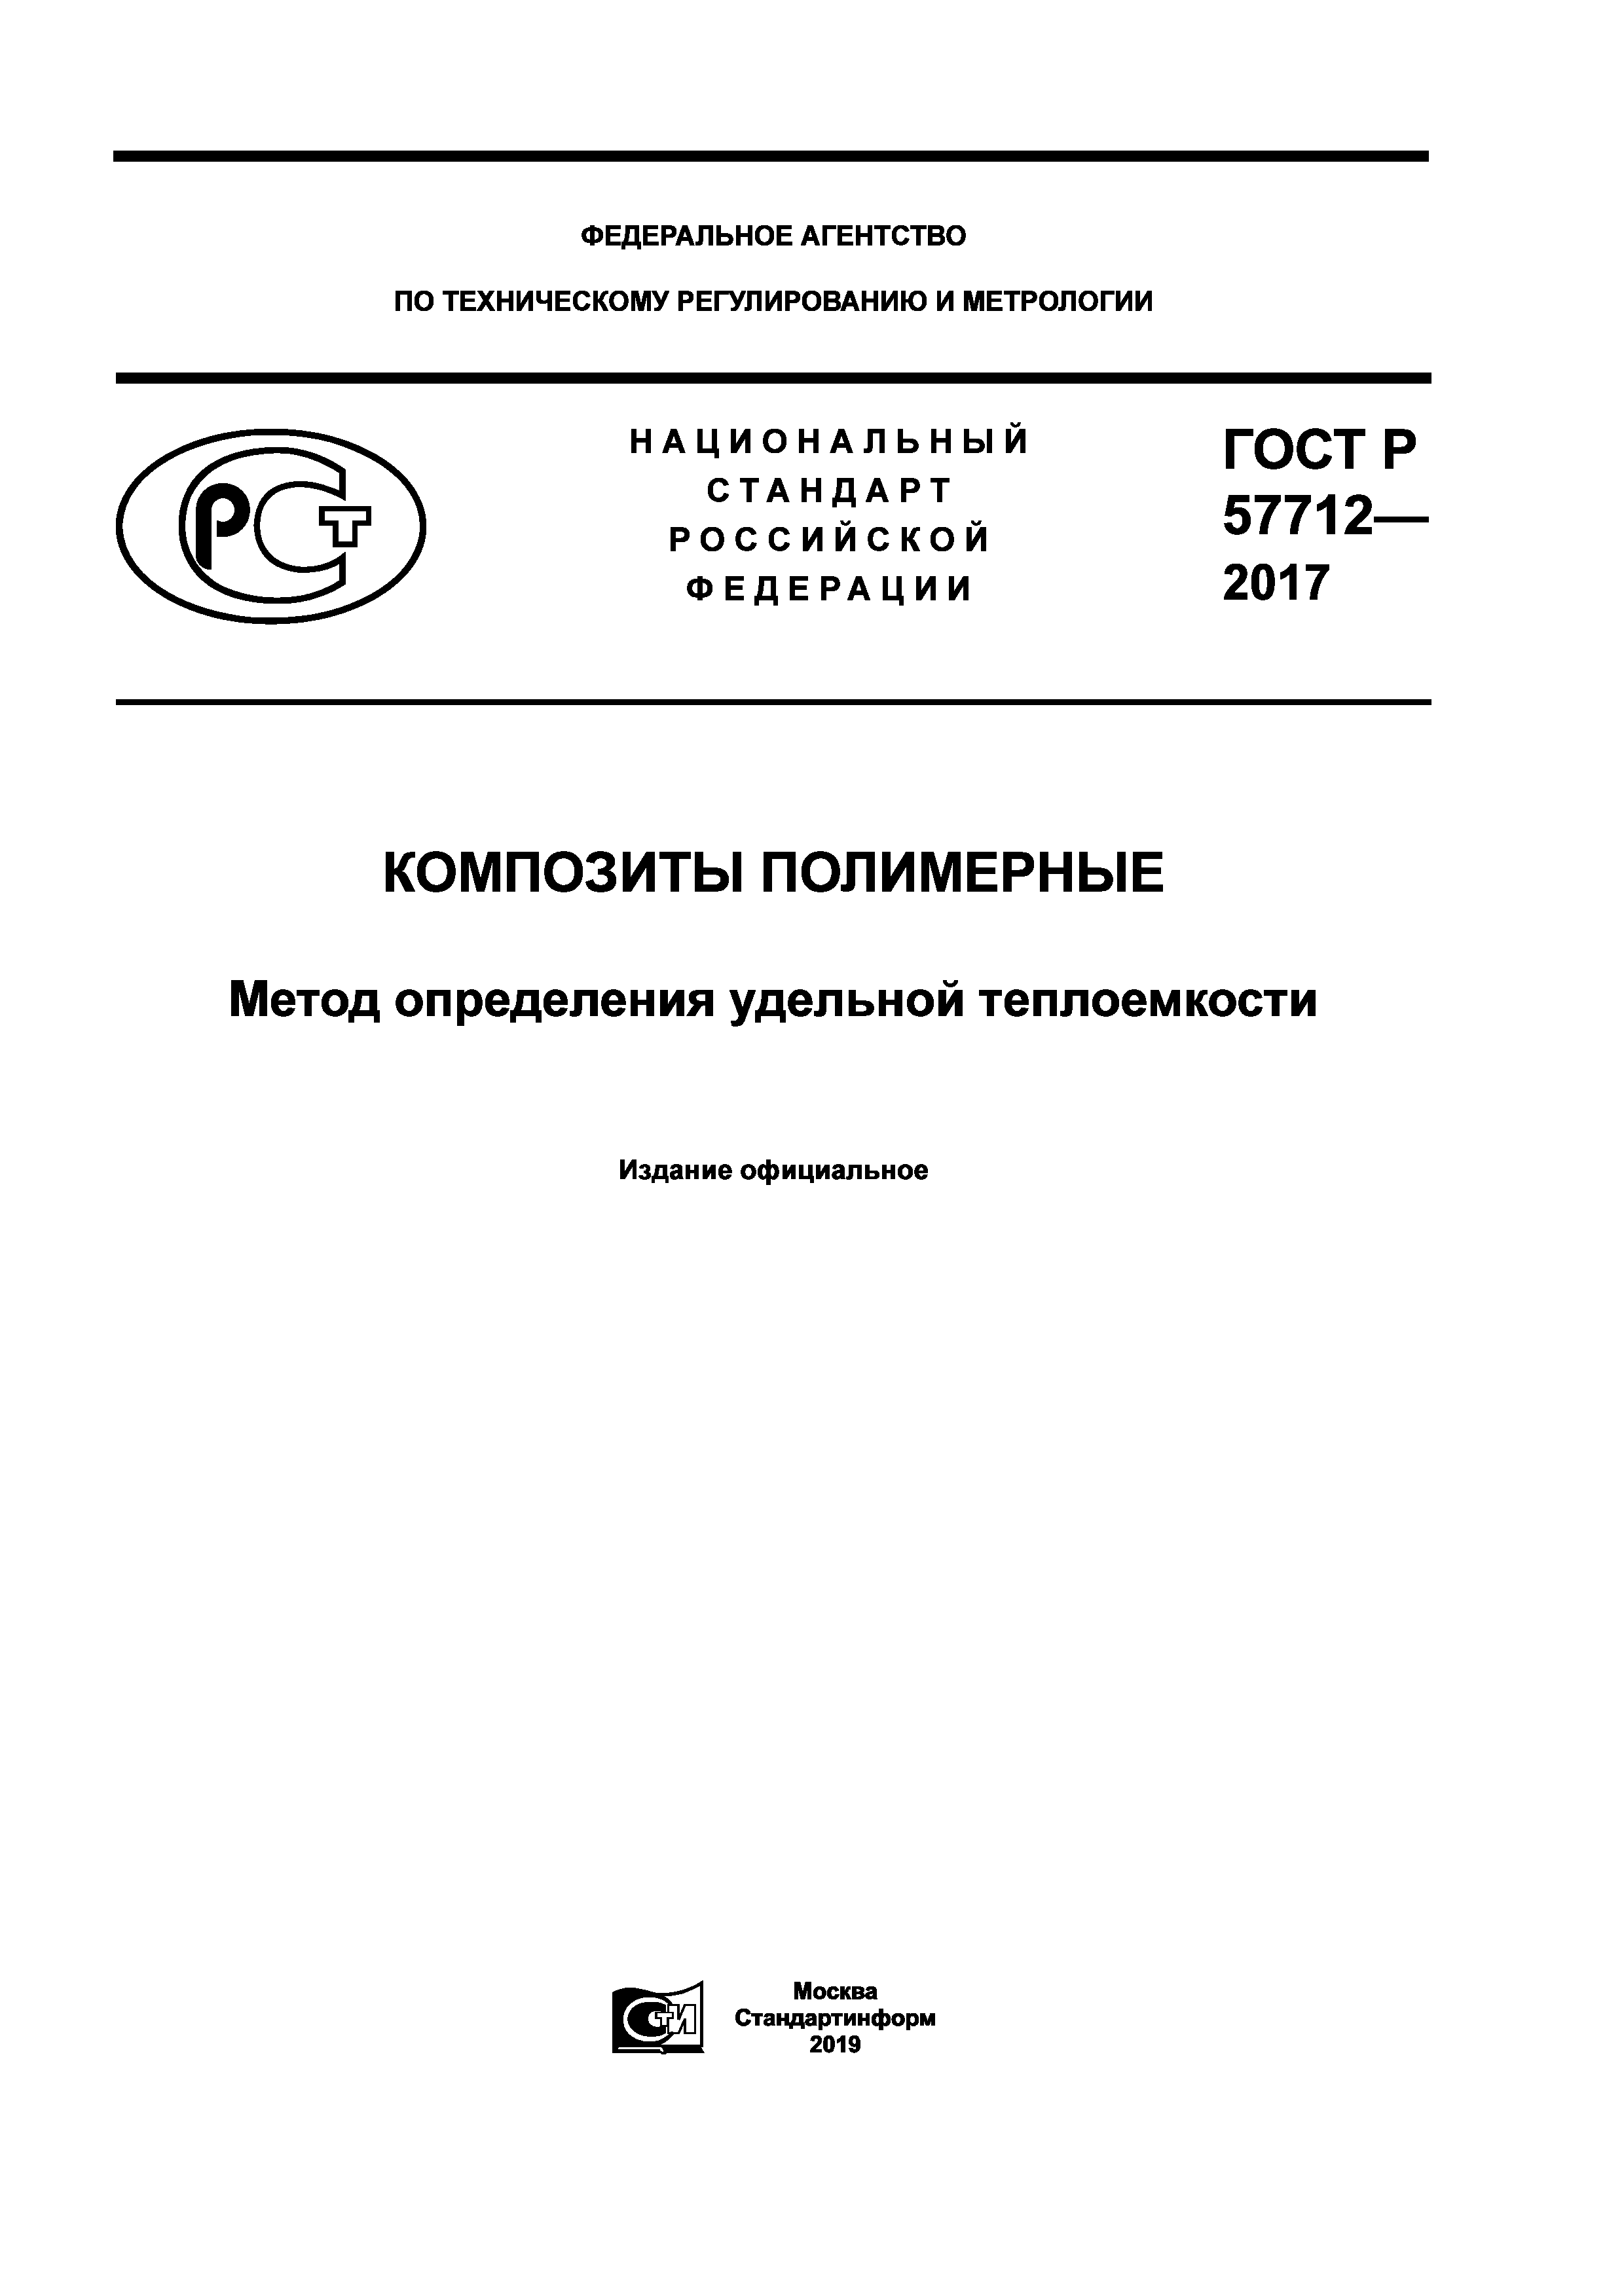 ГОСТ Р 57712-2017